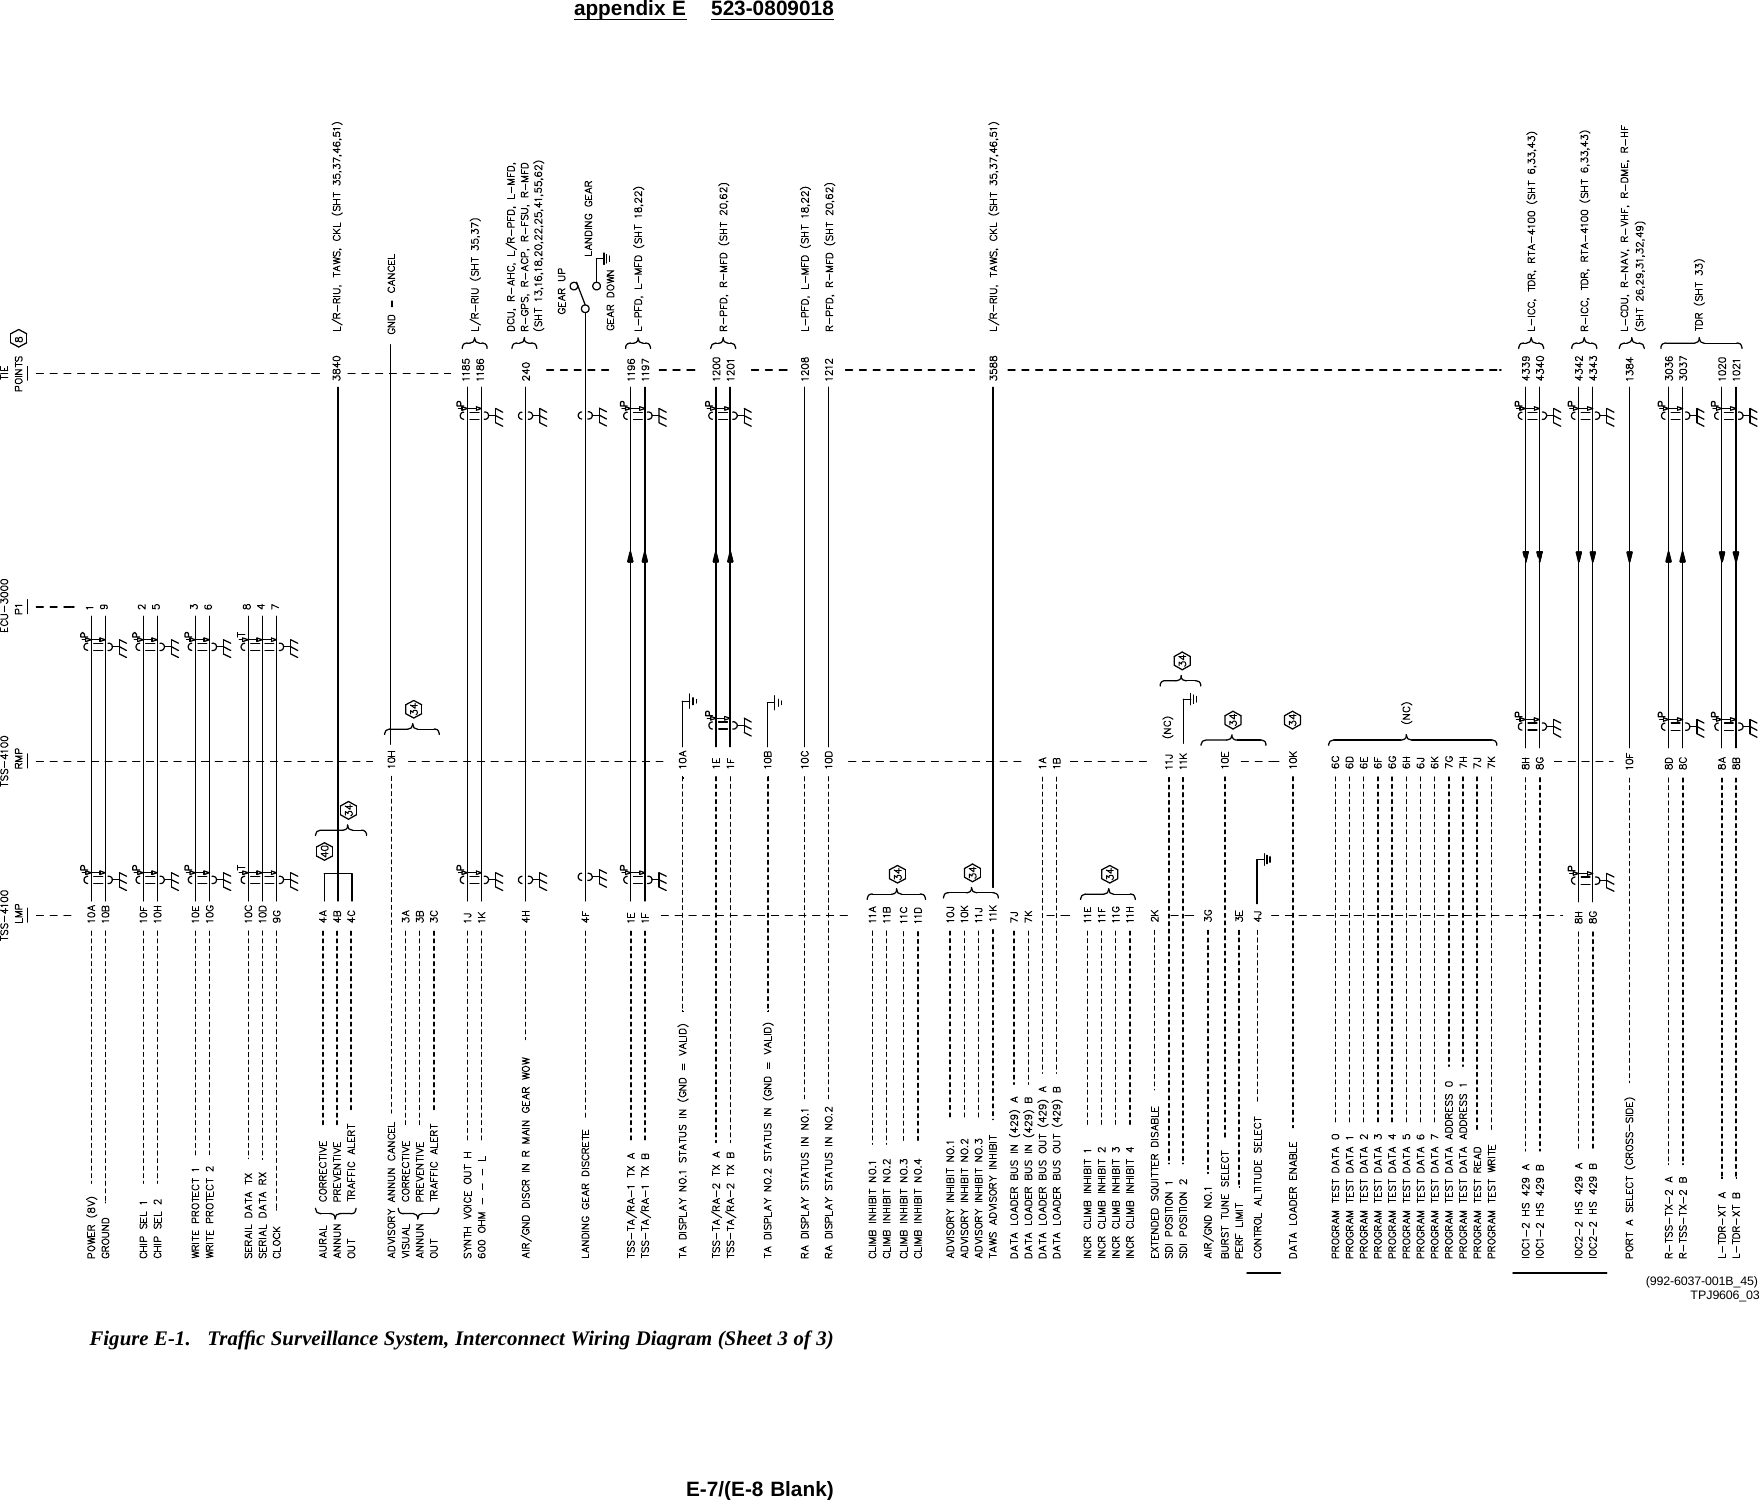 appendix E 523-0809018(992-6037-001B_45)TPJ9606_03Figure E-1. Trafﬁc Surveillance System, Interconnect Wiring Diagram (Sheet 3 of 3)E-7/(E-8 Blank)